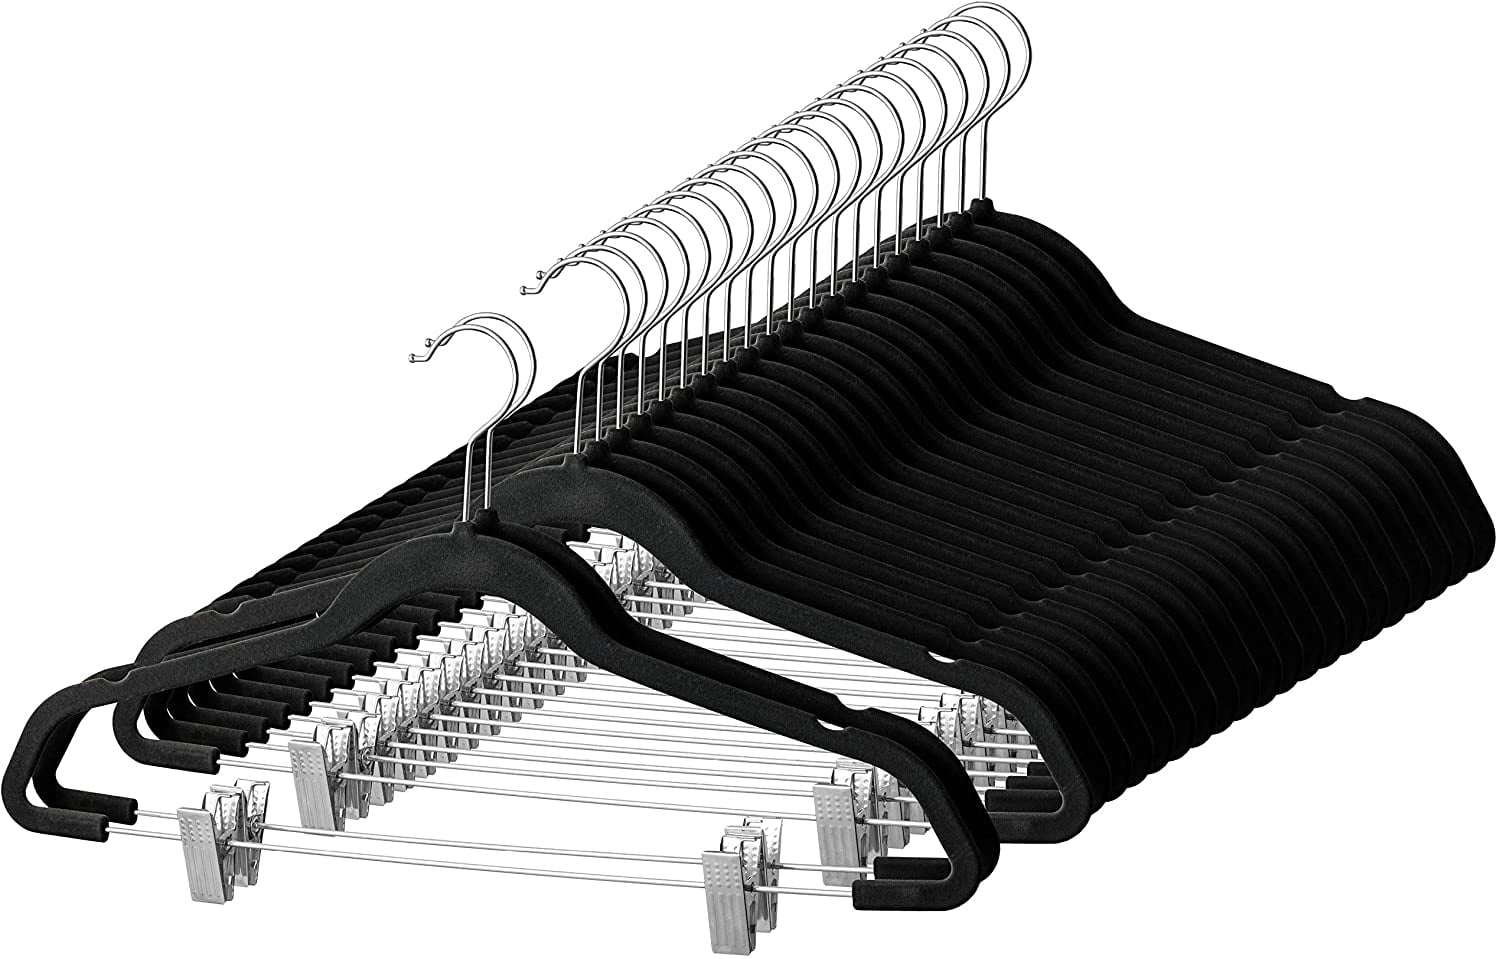 Non-Slip Velvet Hangers Ultra Thin Space saving Durable Hangers Suit Hangers 